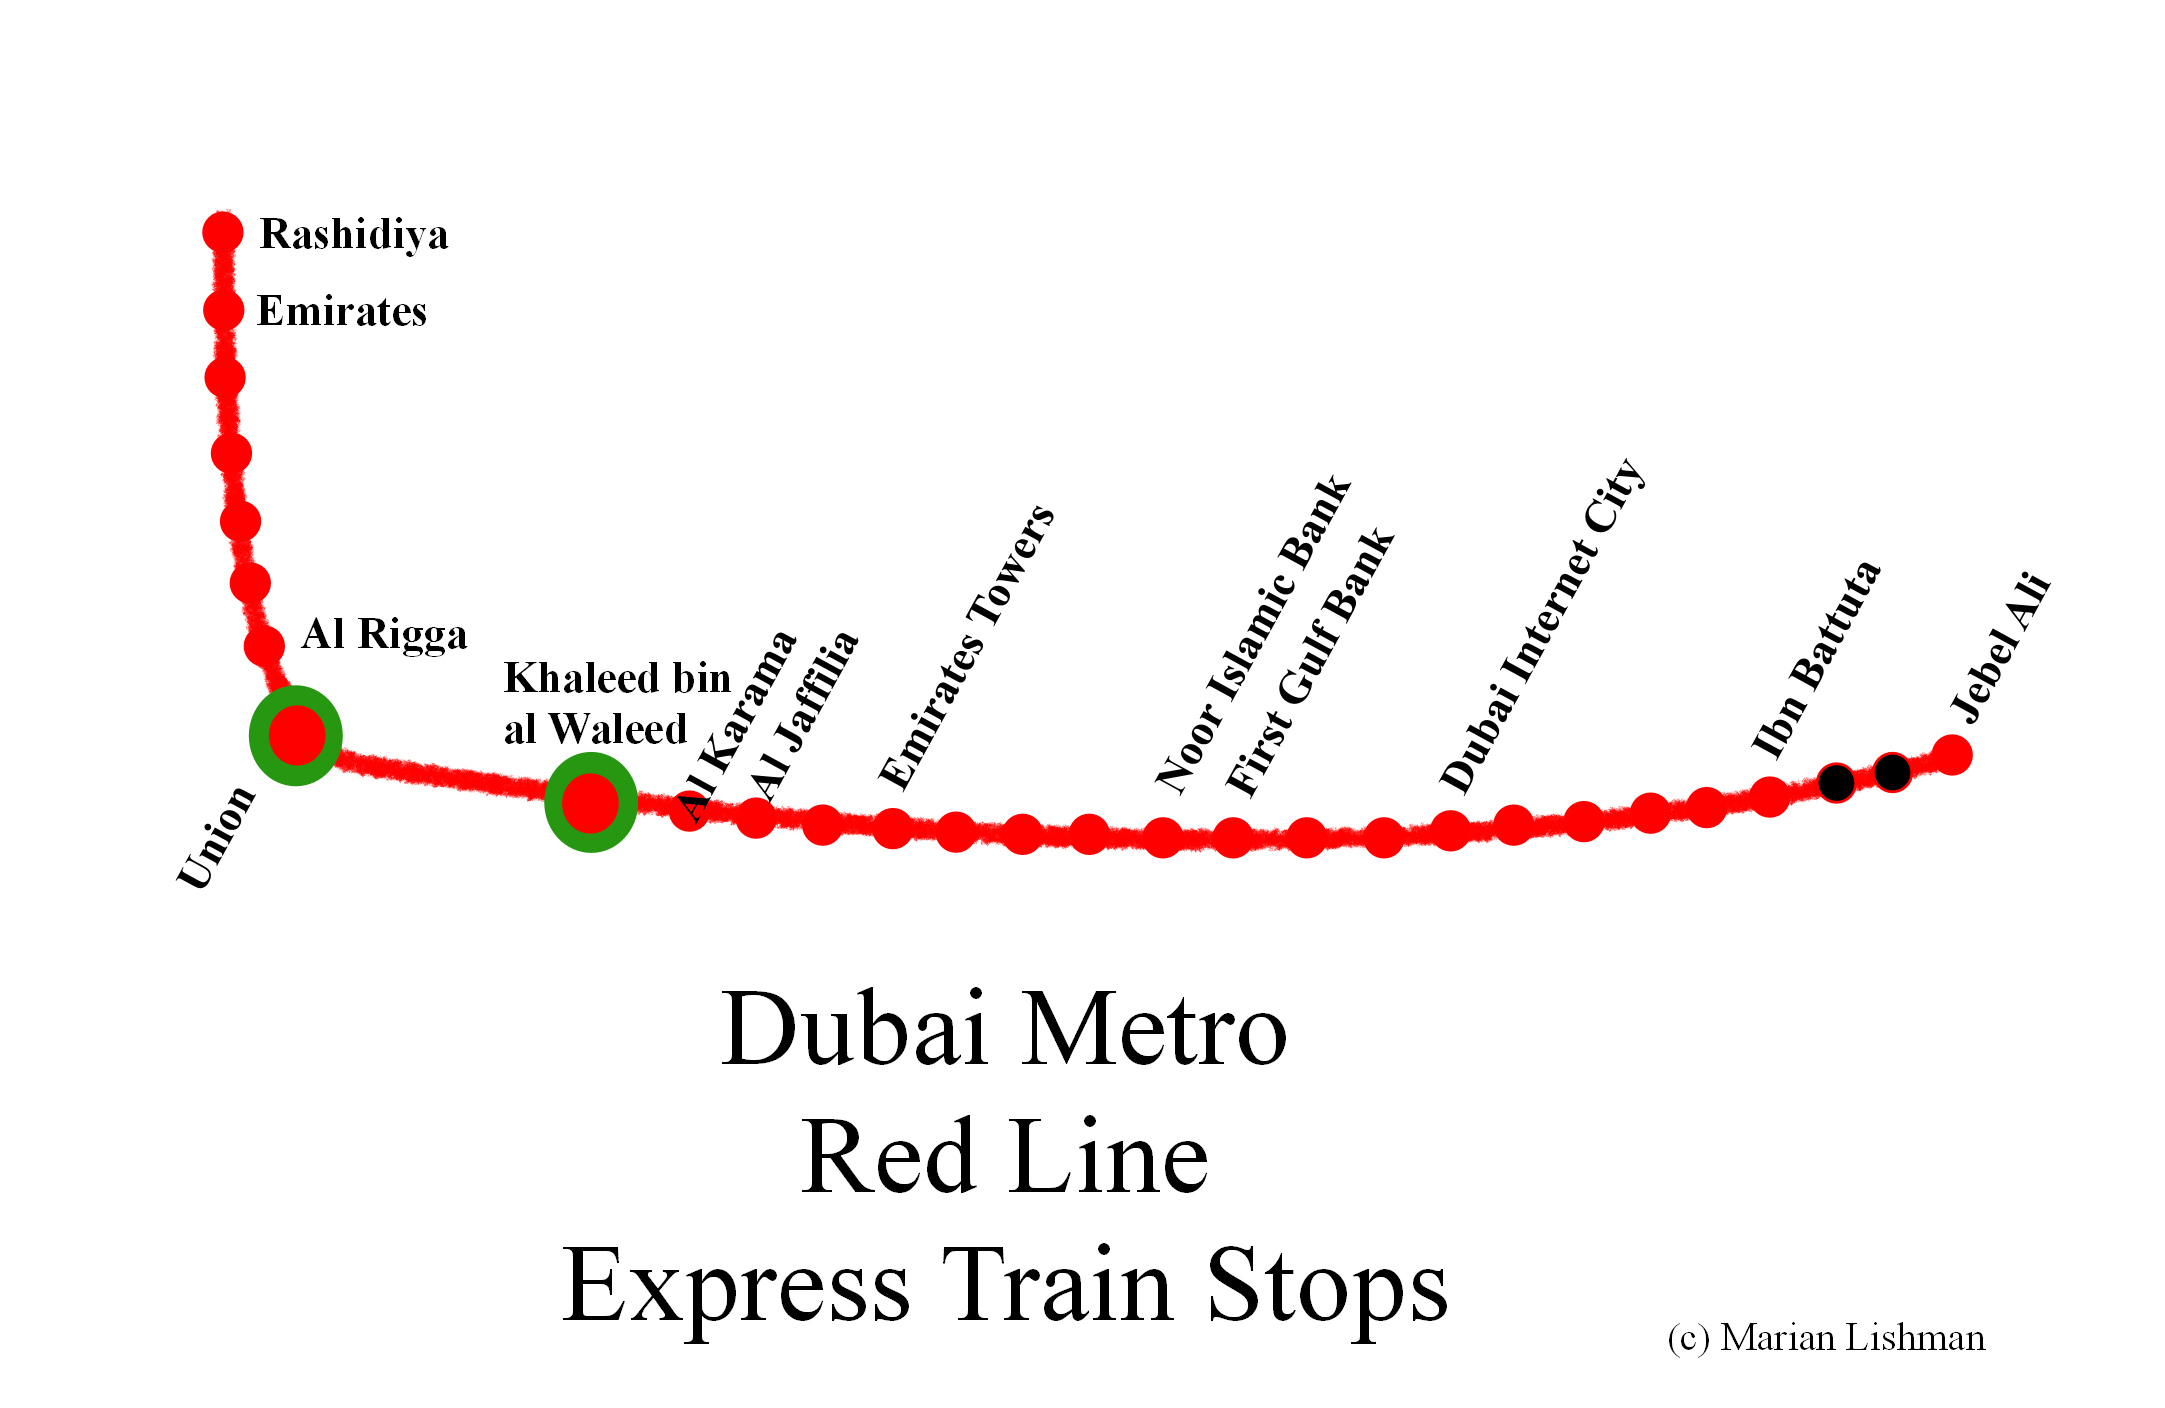 Red Line Archives - Dubai Metro Information